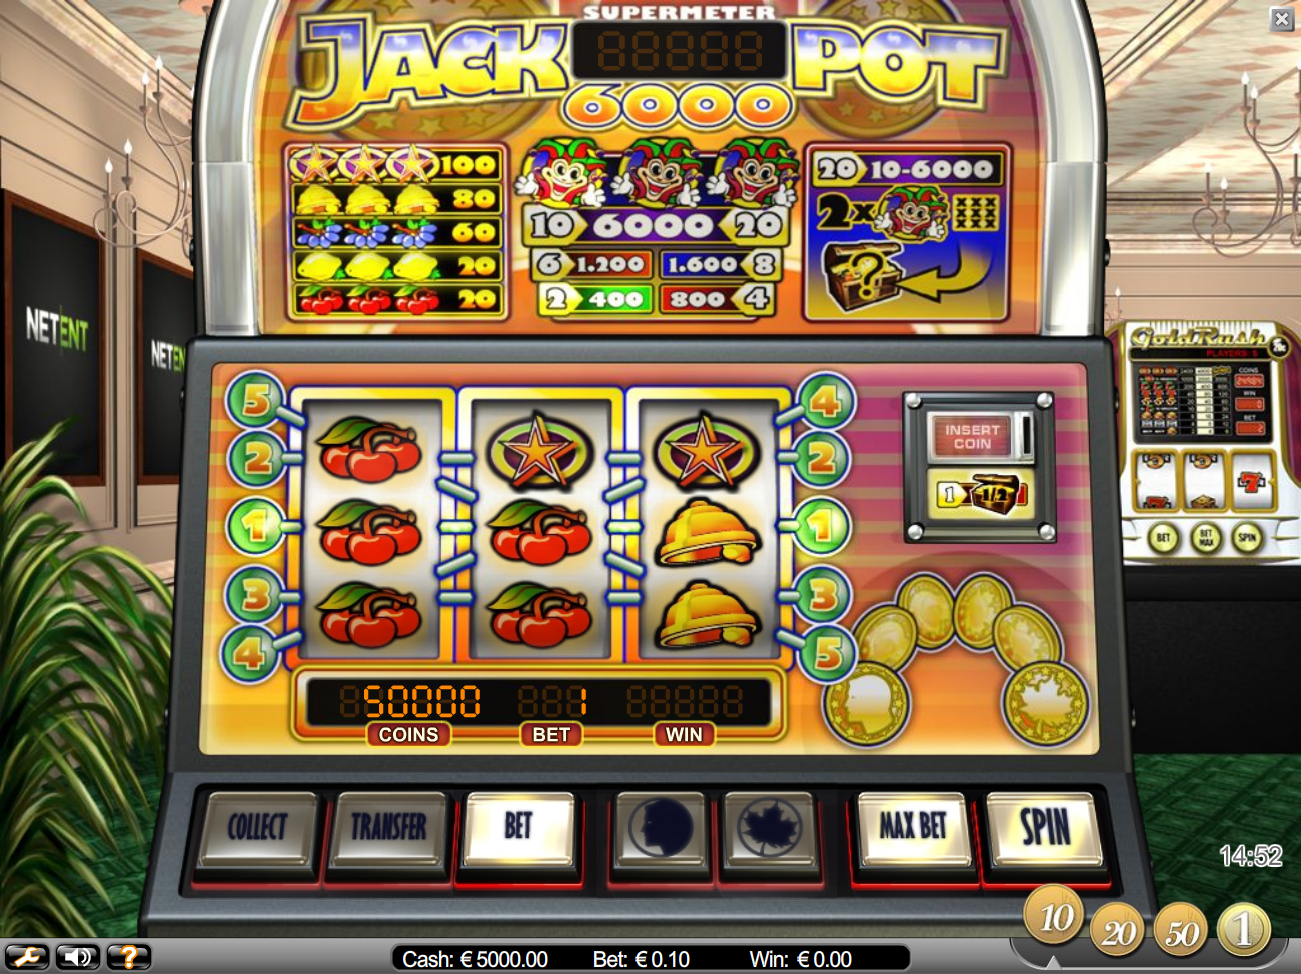 Jackpot 6000  (Jackpot 6000) from category Slots